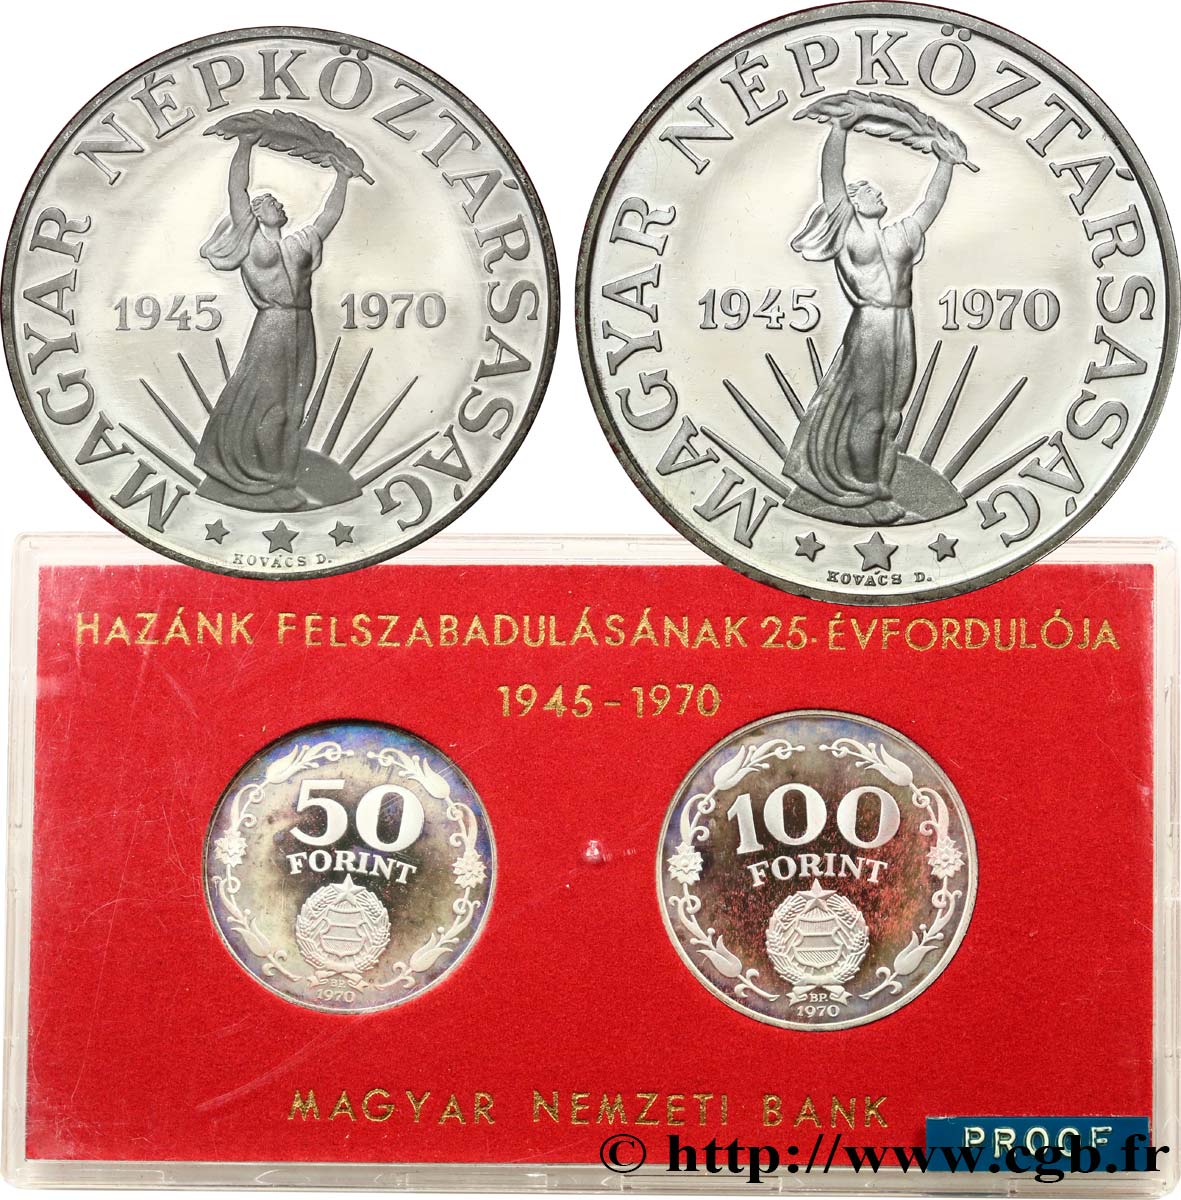 HUNGRíA Série Proof - 2 monnaies - Forint 25e anniversaire de la Libération 1945-1970 1970 Budapest Prueba 